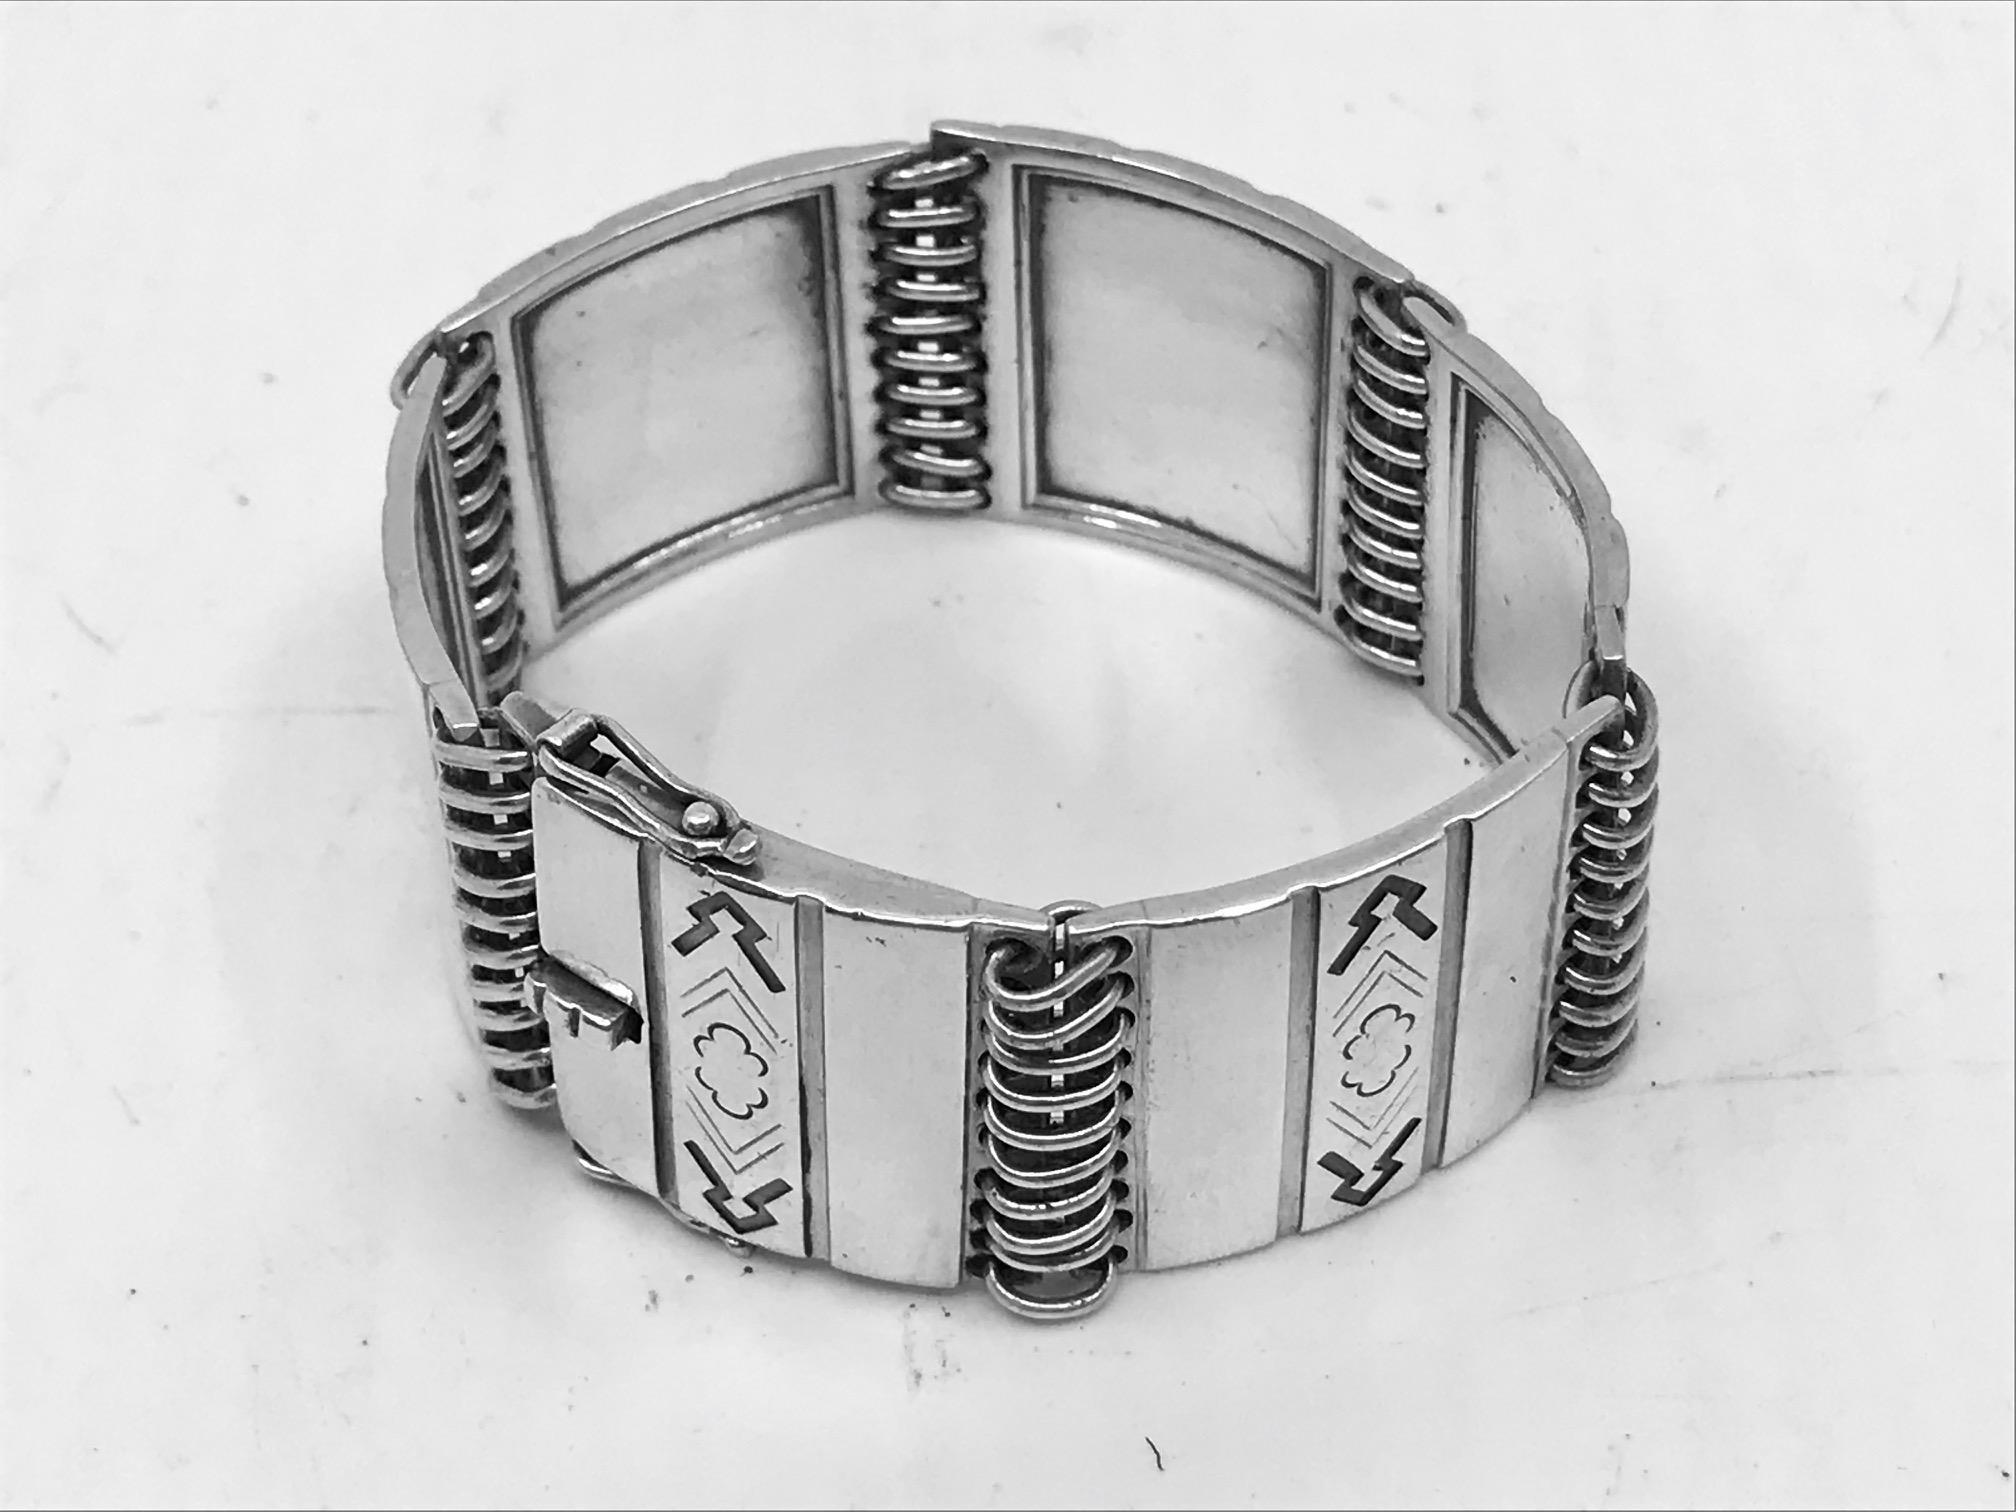 Vintage Sterling Silver Georg Jensen bracelet with Mayan inspired pattern, design #65 by Oscar Gundlach-Pedersen from circa 1931.
Quite a wide bracelet, it Measures 7½” in length, each link is 1″ across (19cm, 2.5cm).
With vintage Georg Jensen